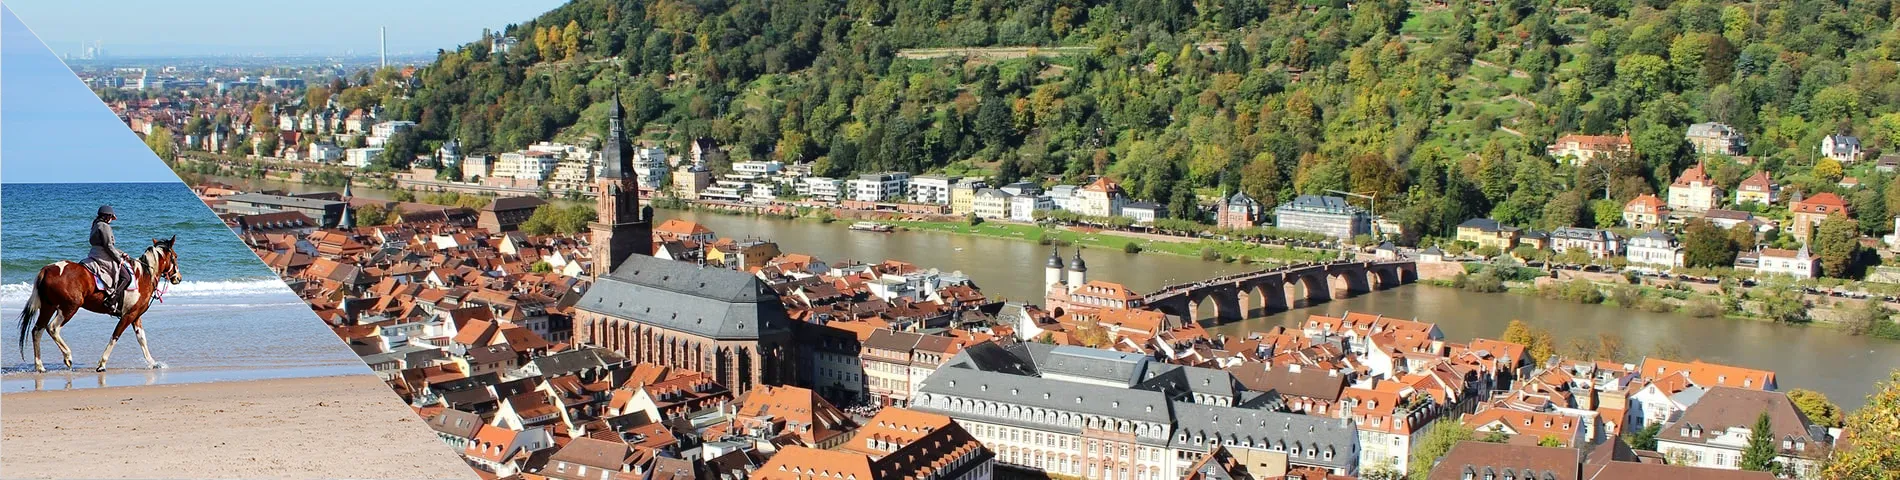 Heidelberg - Alemão & Passeios a cavalo